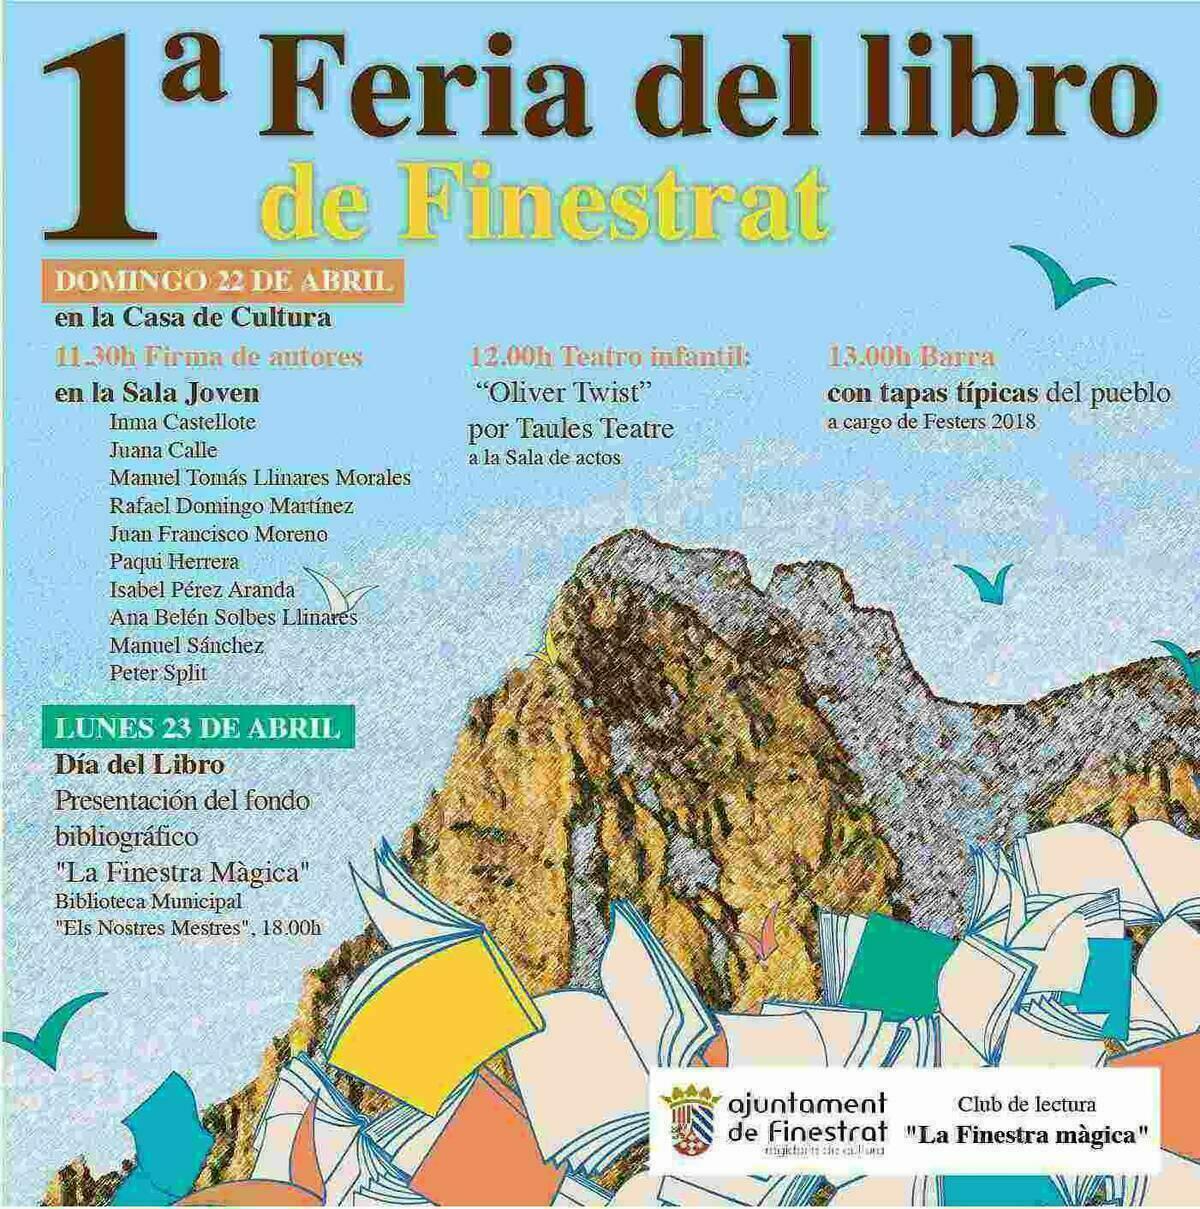 Este domingo 22 de abril se celebra la “I Feria del Libro de Finestrat”